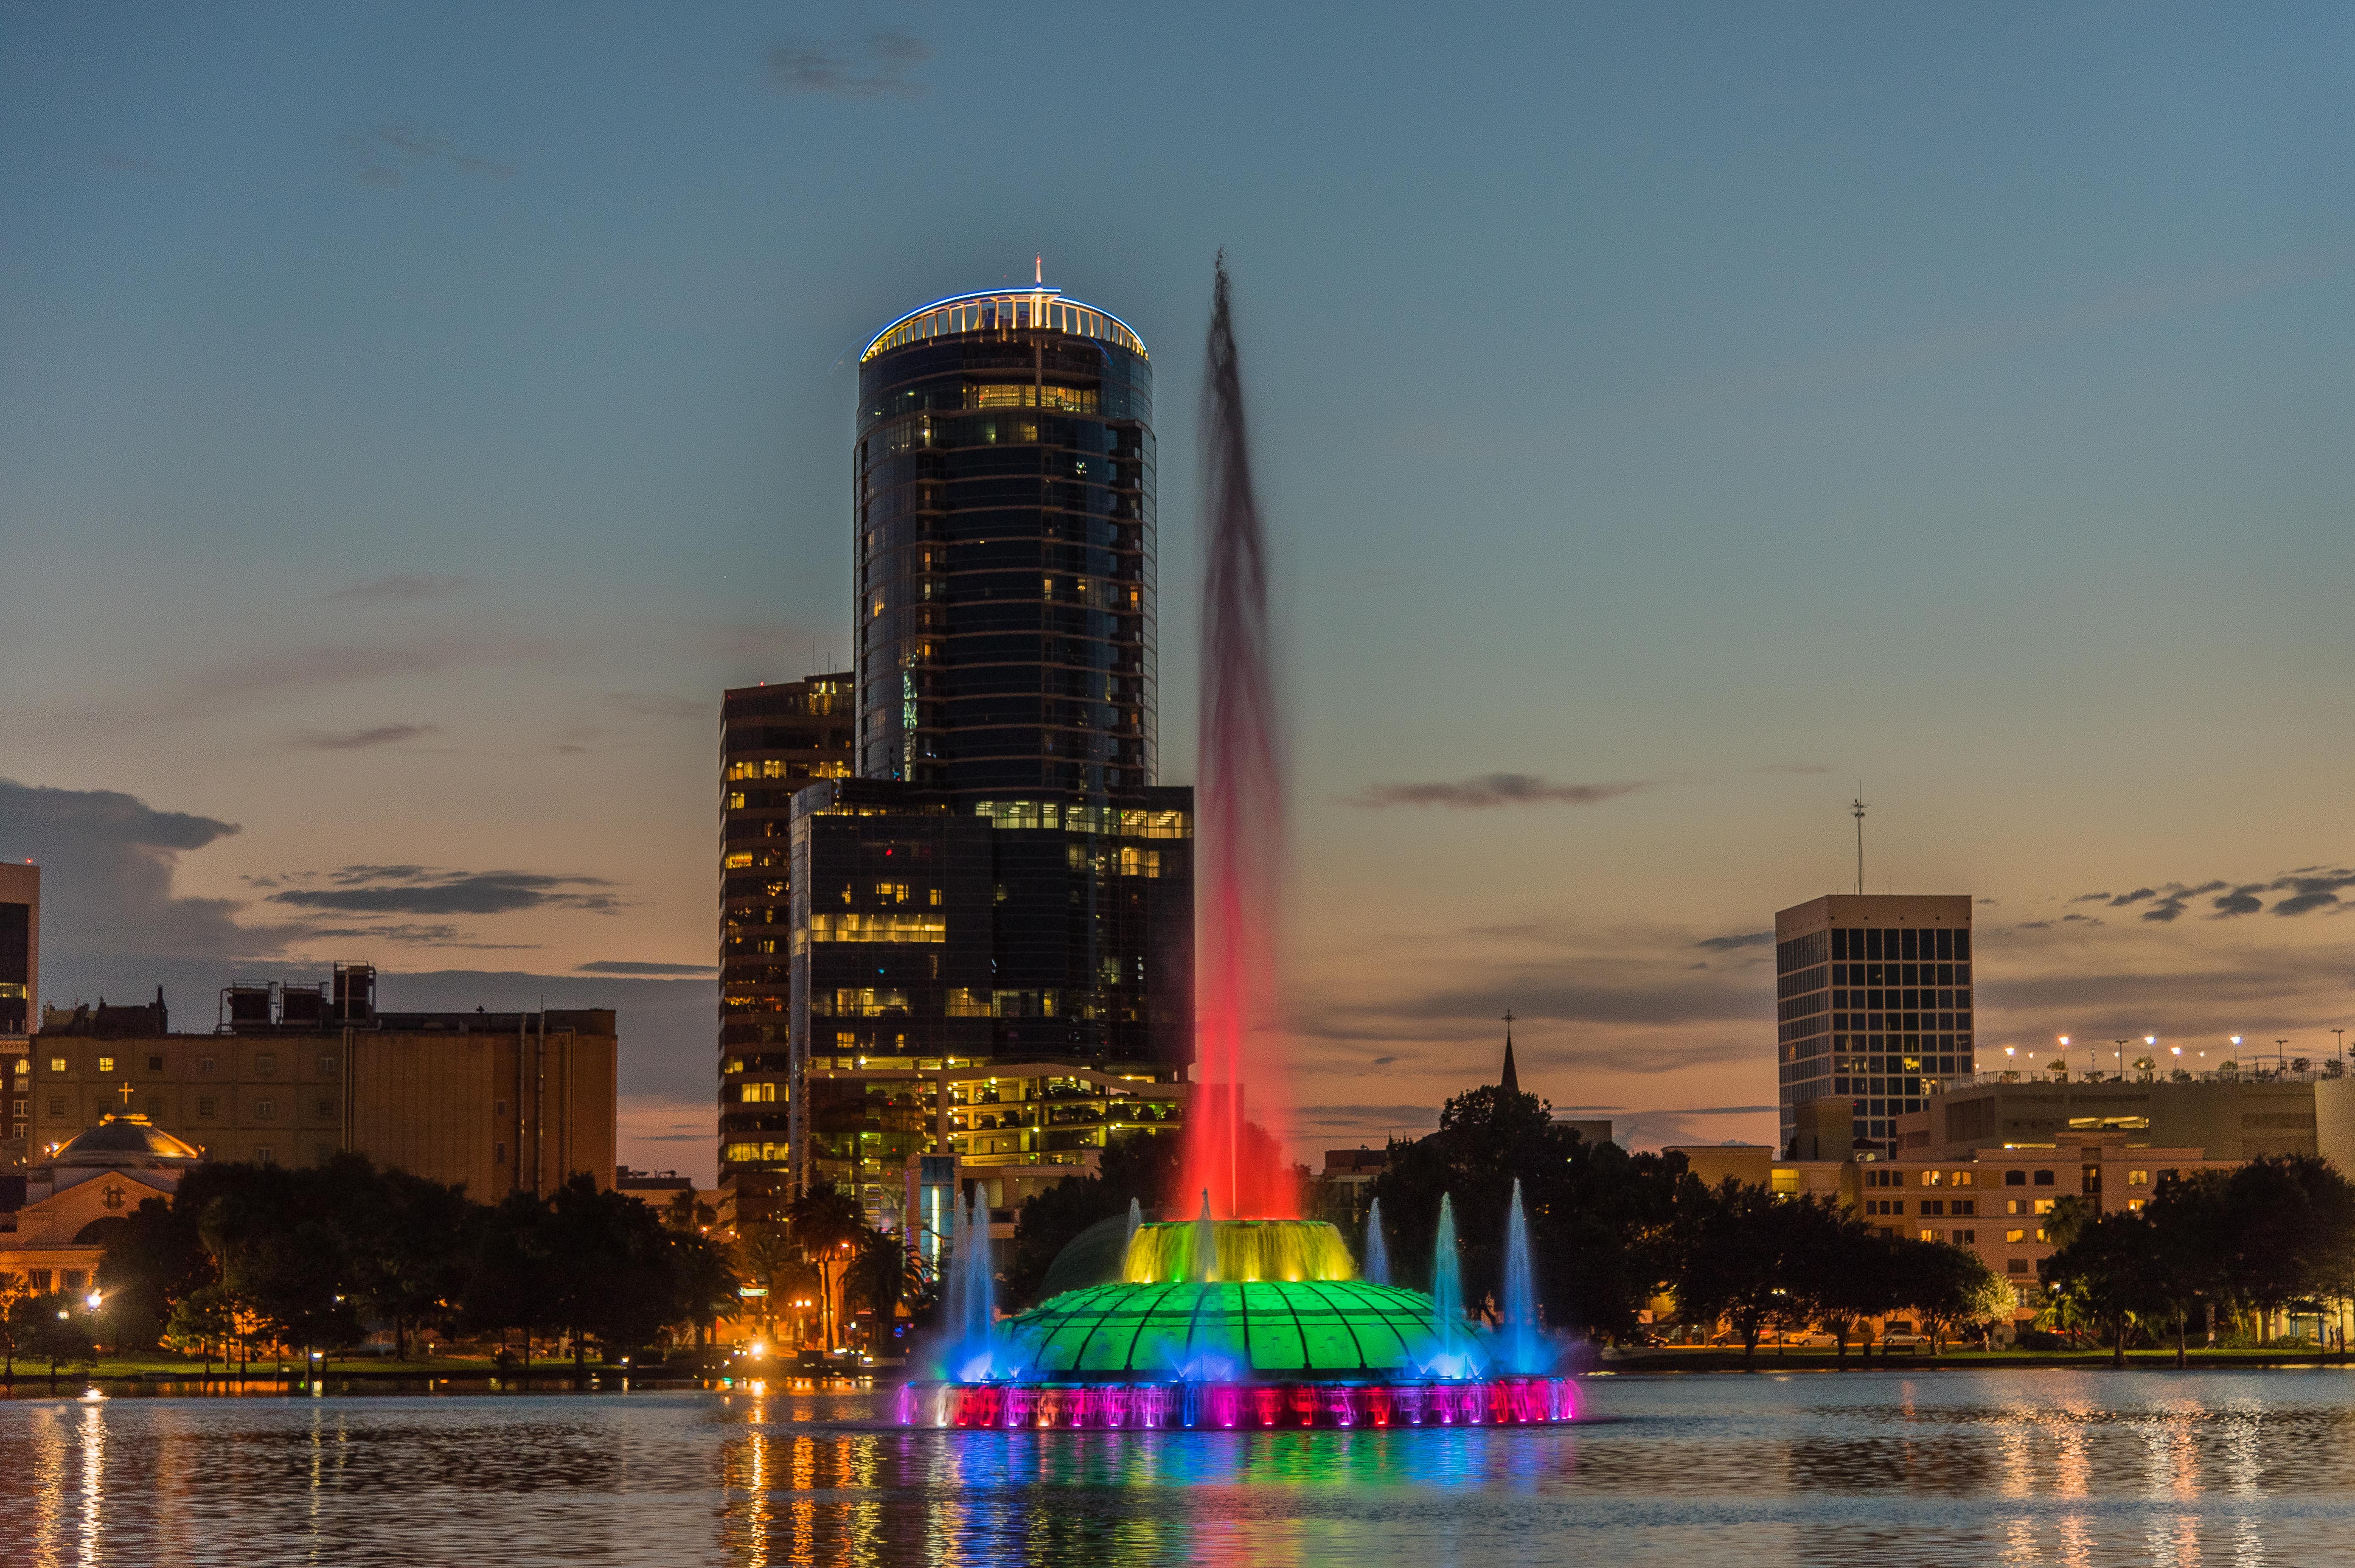 Photo Contest: Orlando United Fountain at Lake Eola Park